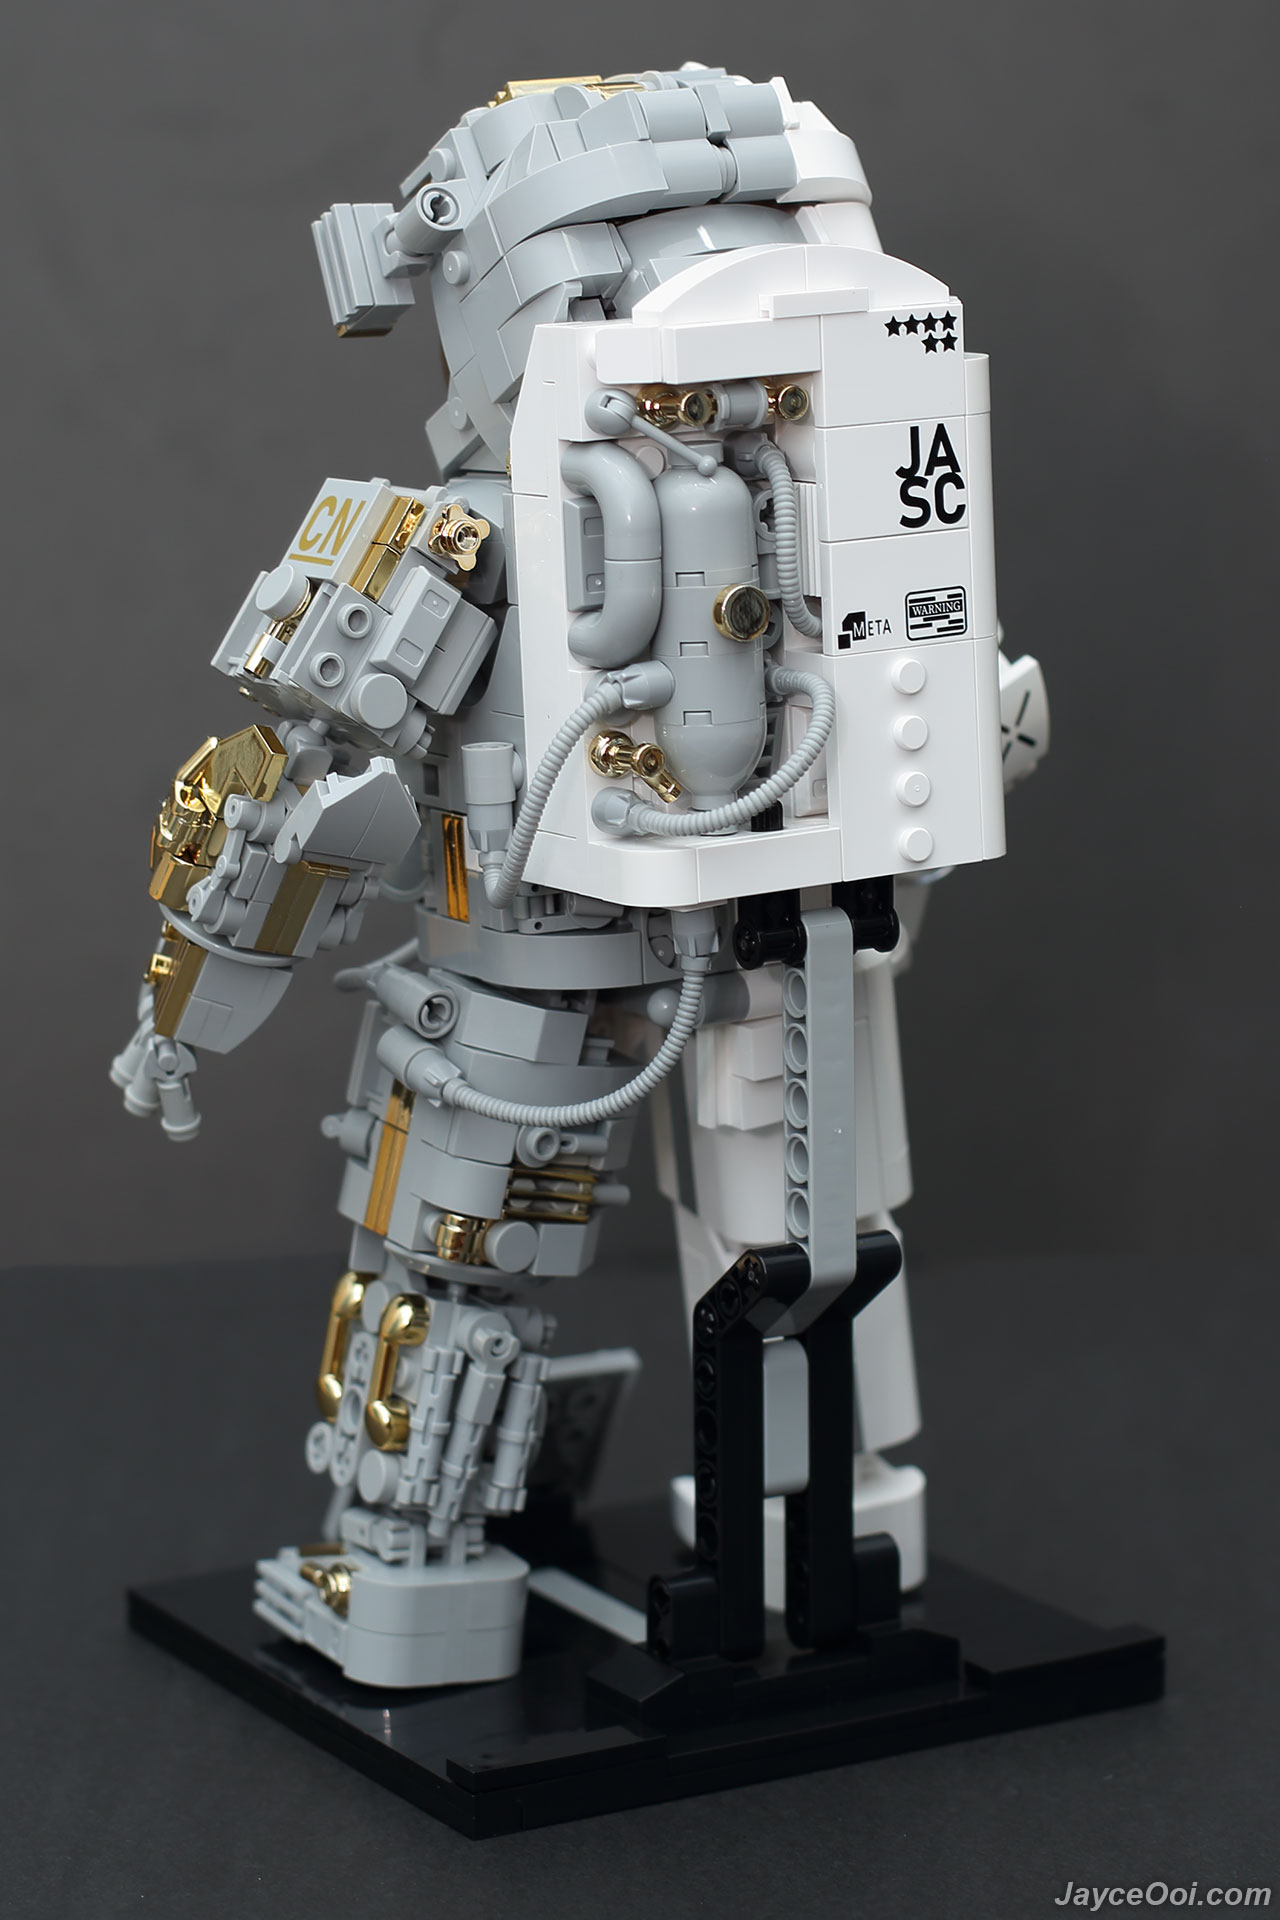 It's Not Lego: JMBricklayer Mechanical Spaceman 70102 Building Set